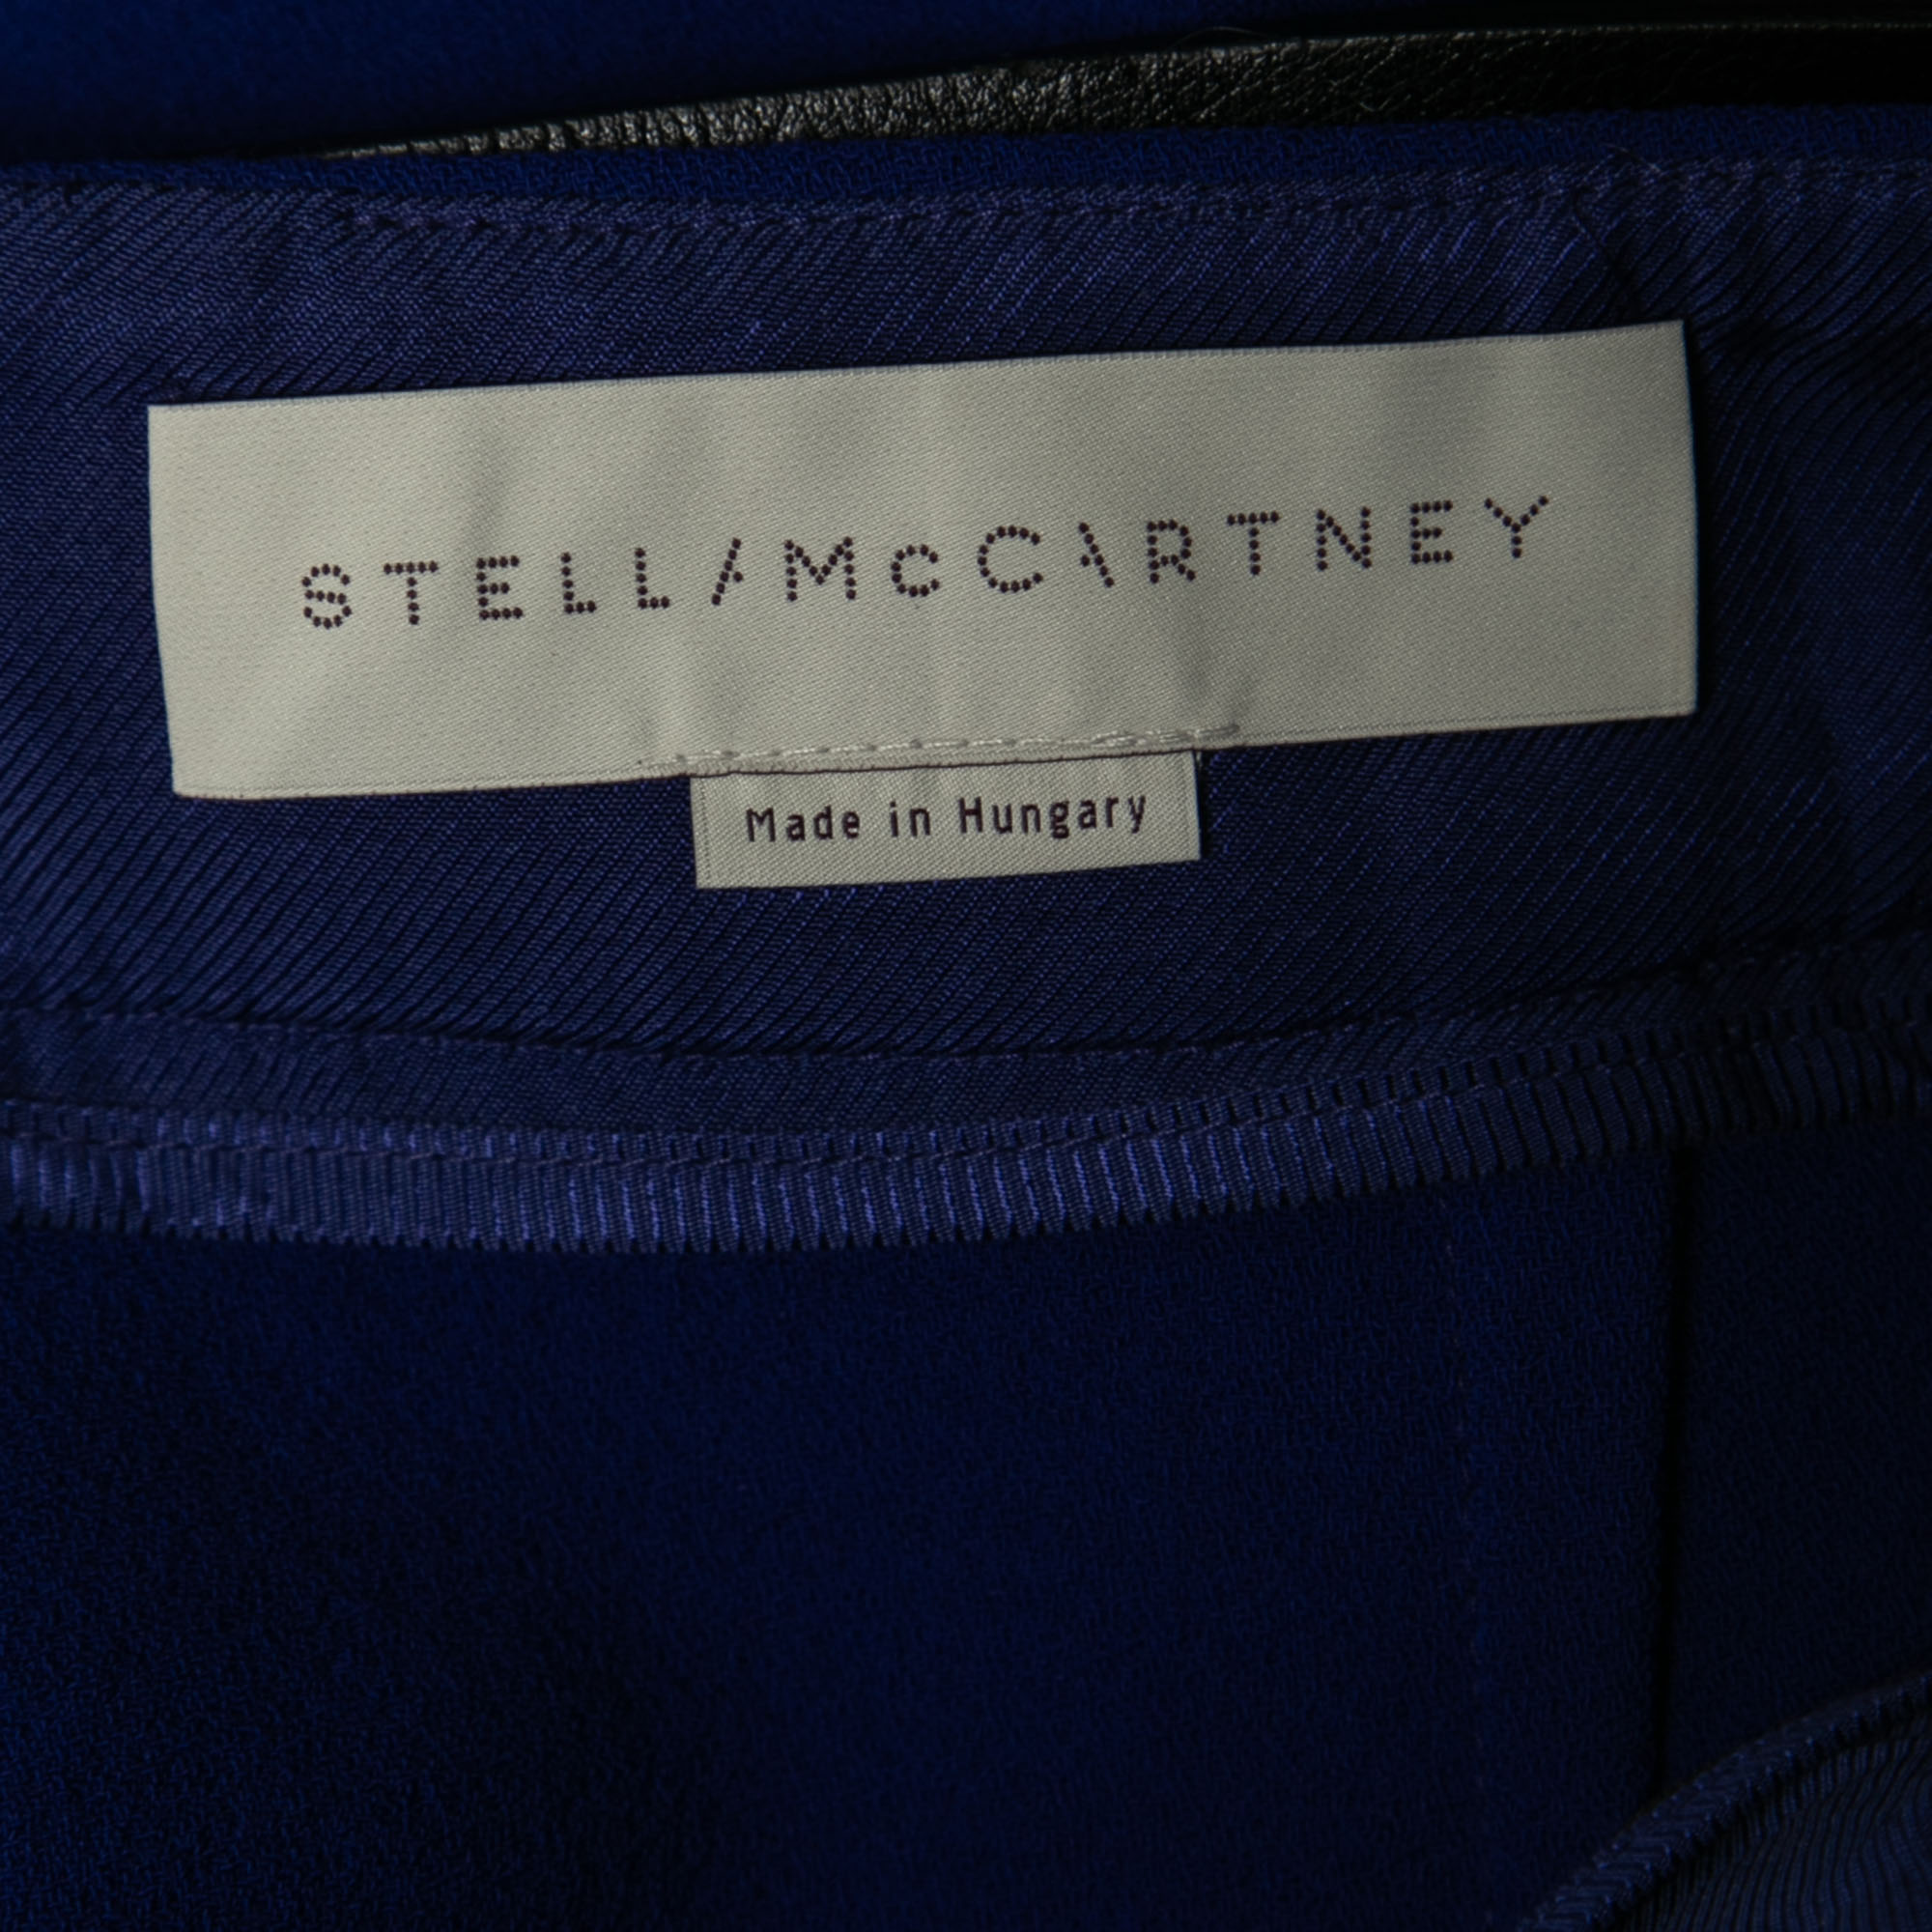 Stella McCartney Blue Wool-Crepe Belted Midi Skirt M